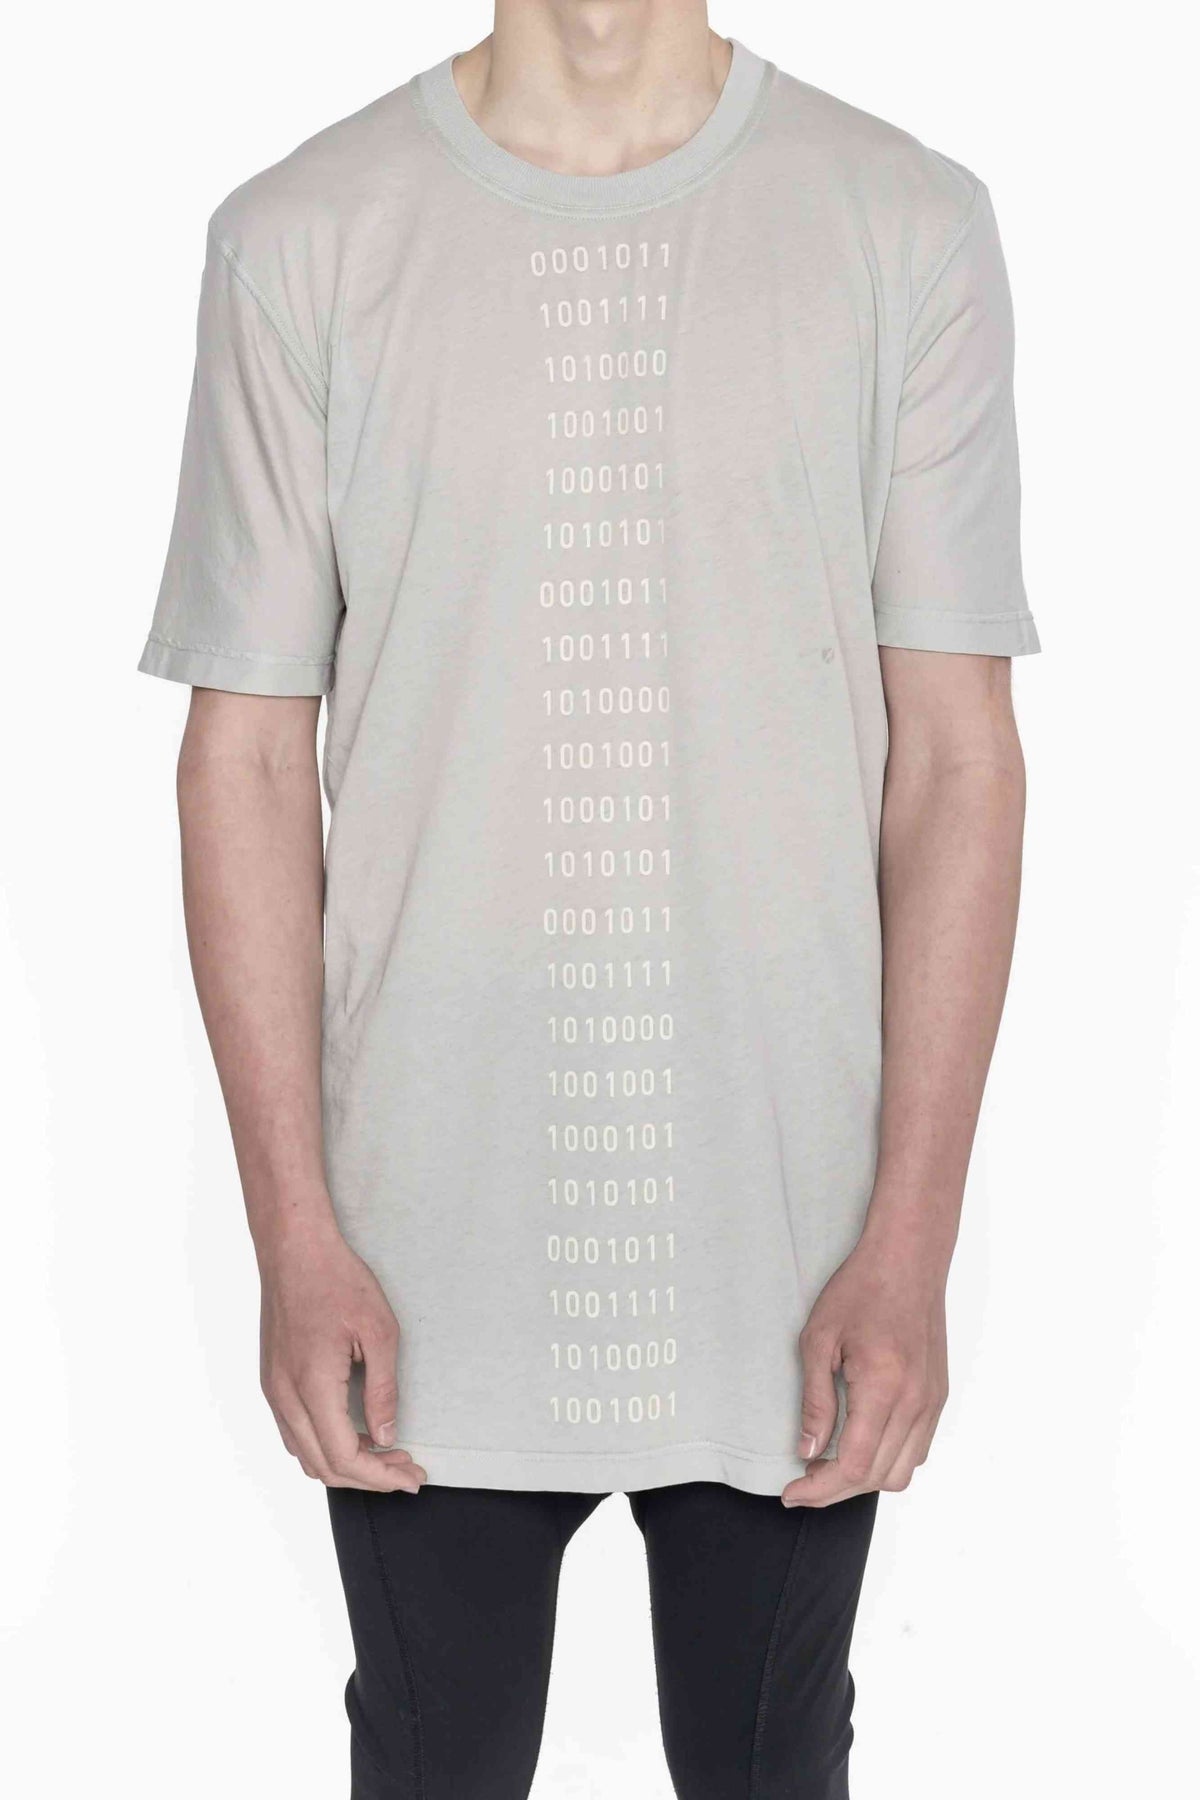 TS5 T-Shirt Light Grey 11 Numeric Code